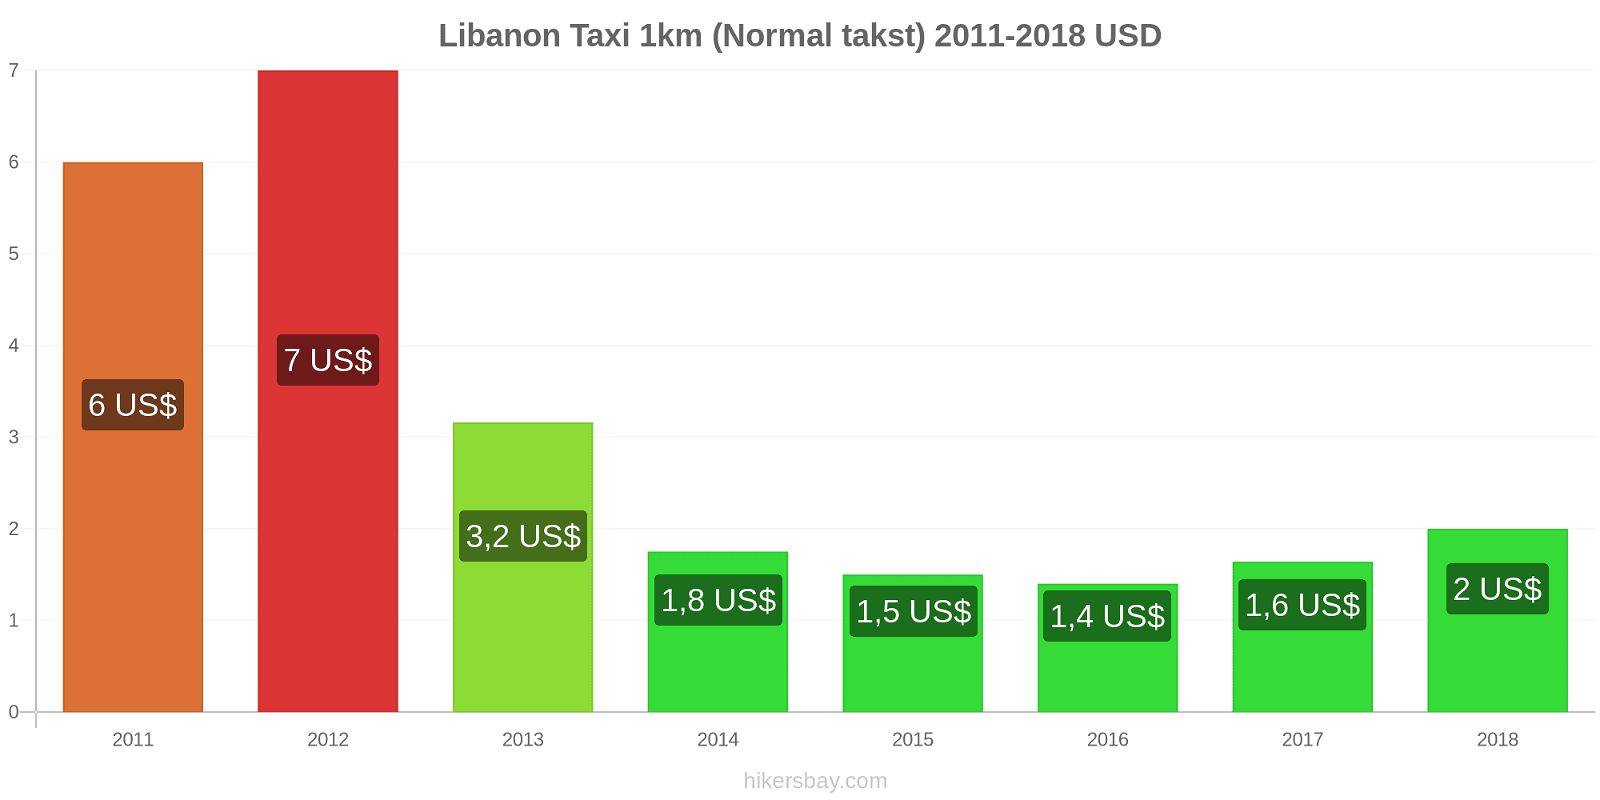 Libanon prisændringer Taxi 1km (normal takst) hikersbay.com